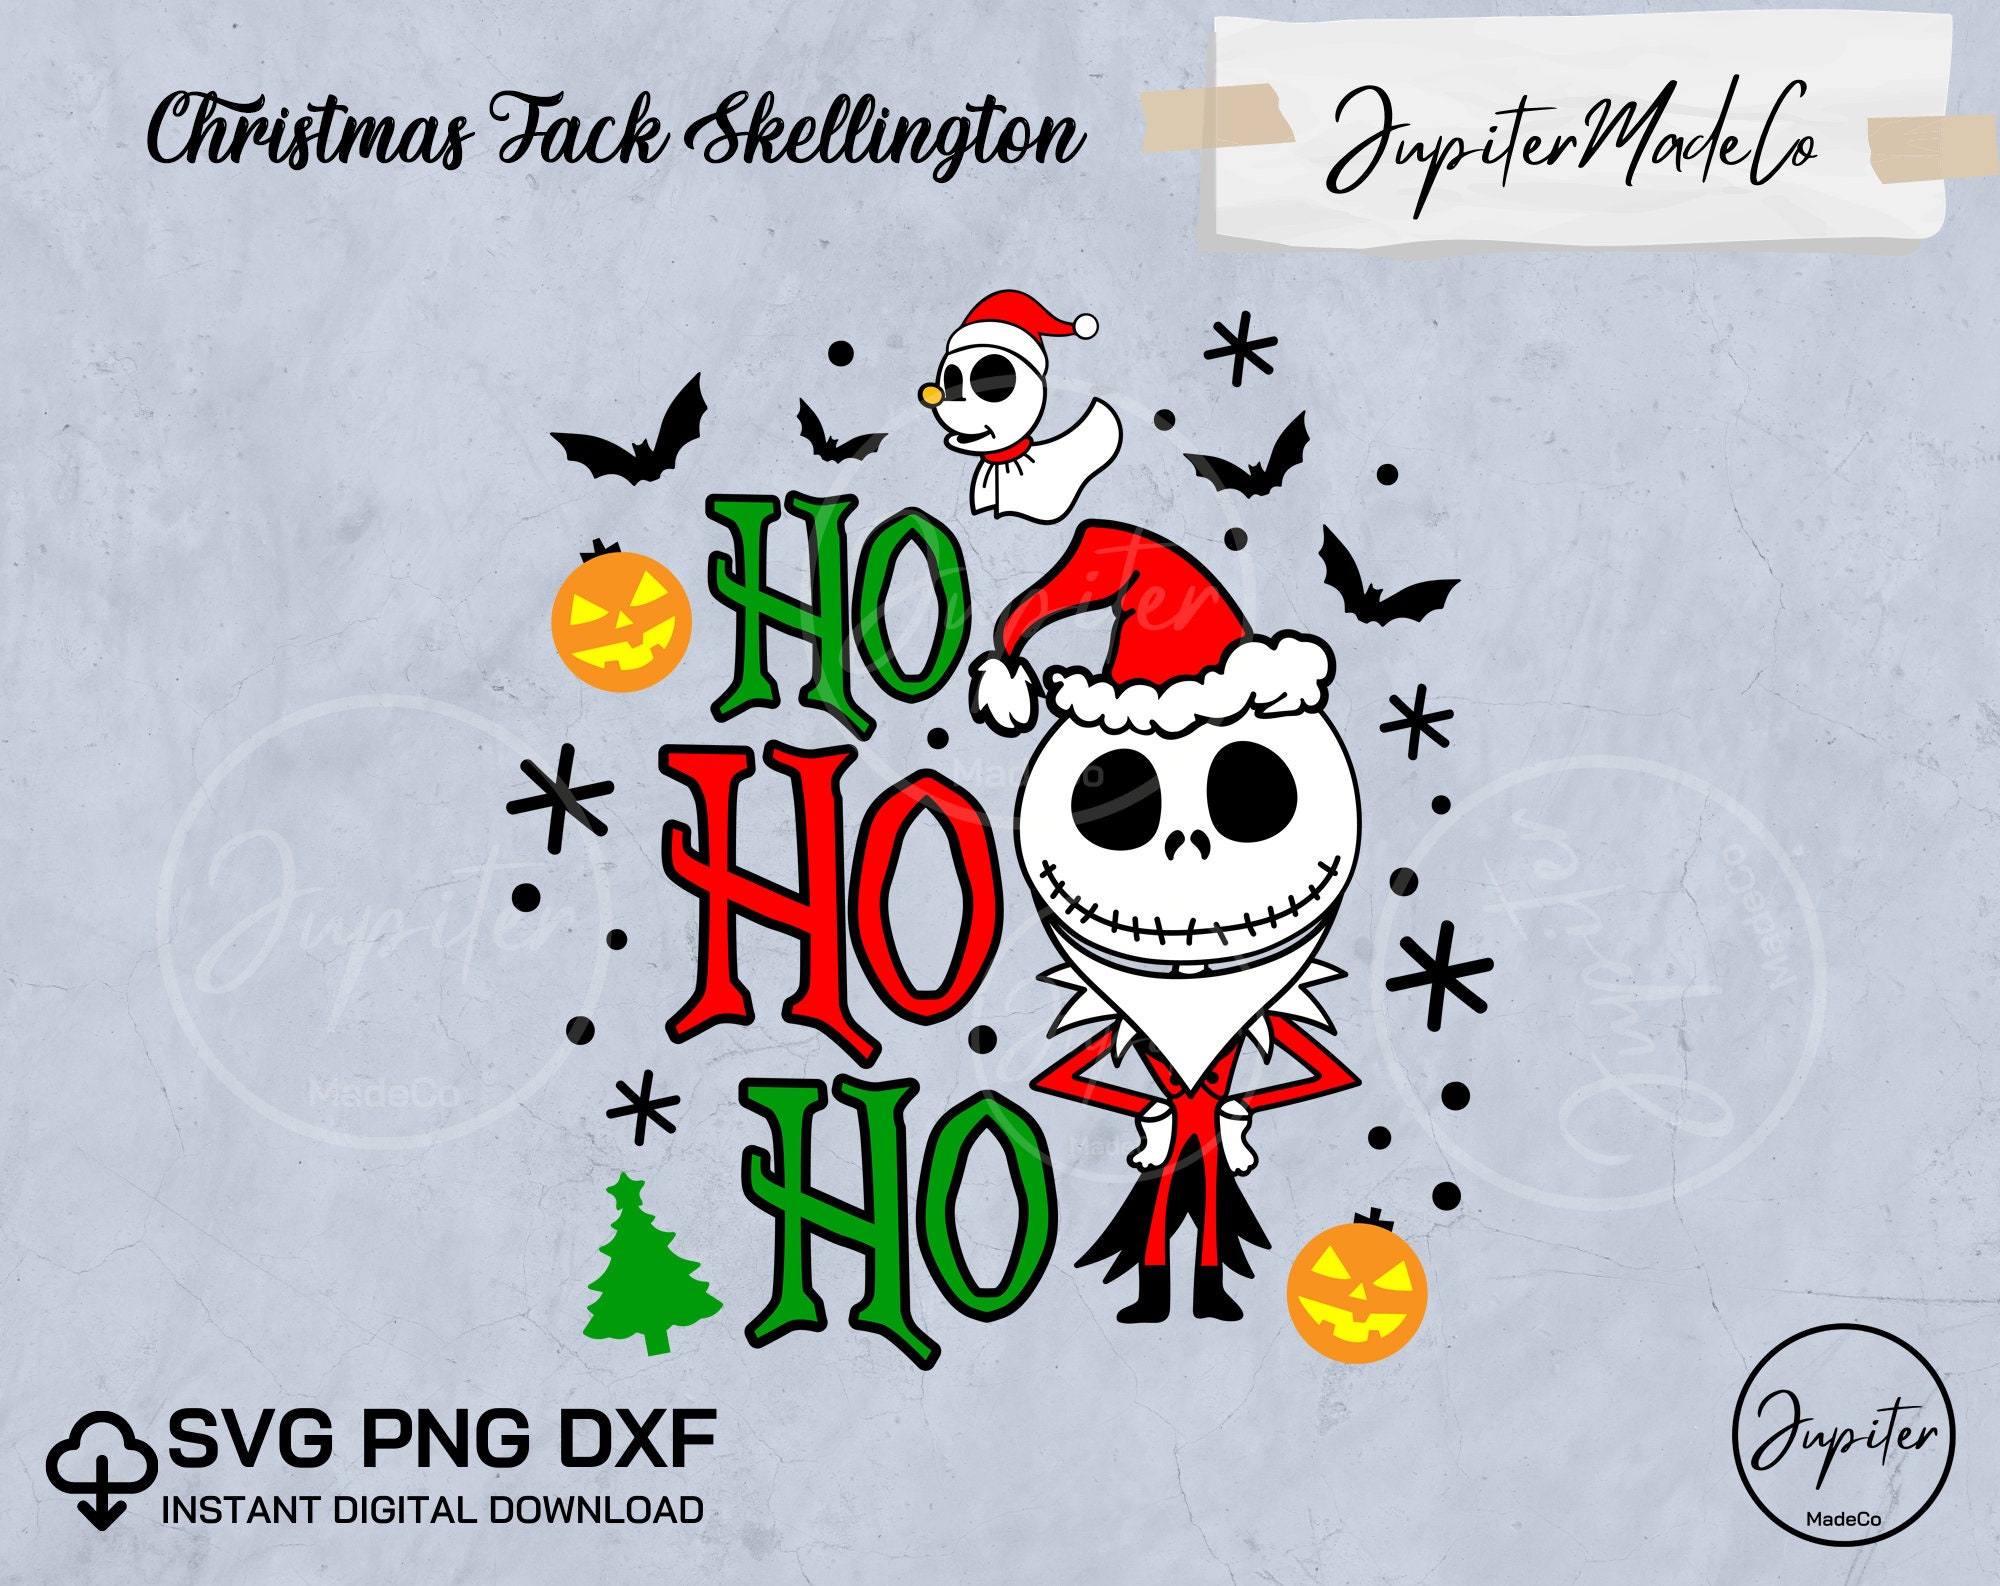 Ho Ho Ho Jack skellington santa claus SVG, Jack skellington